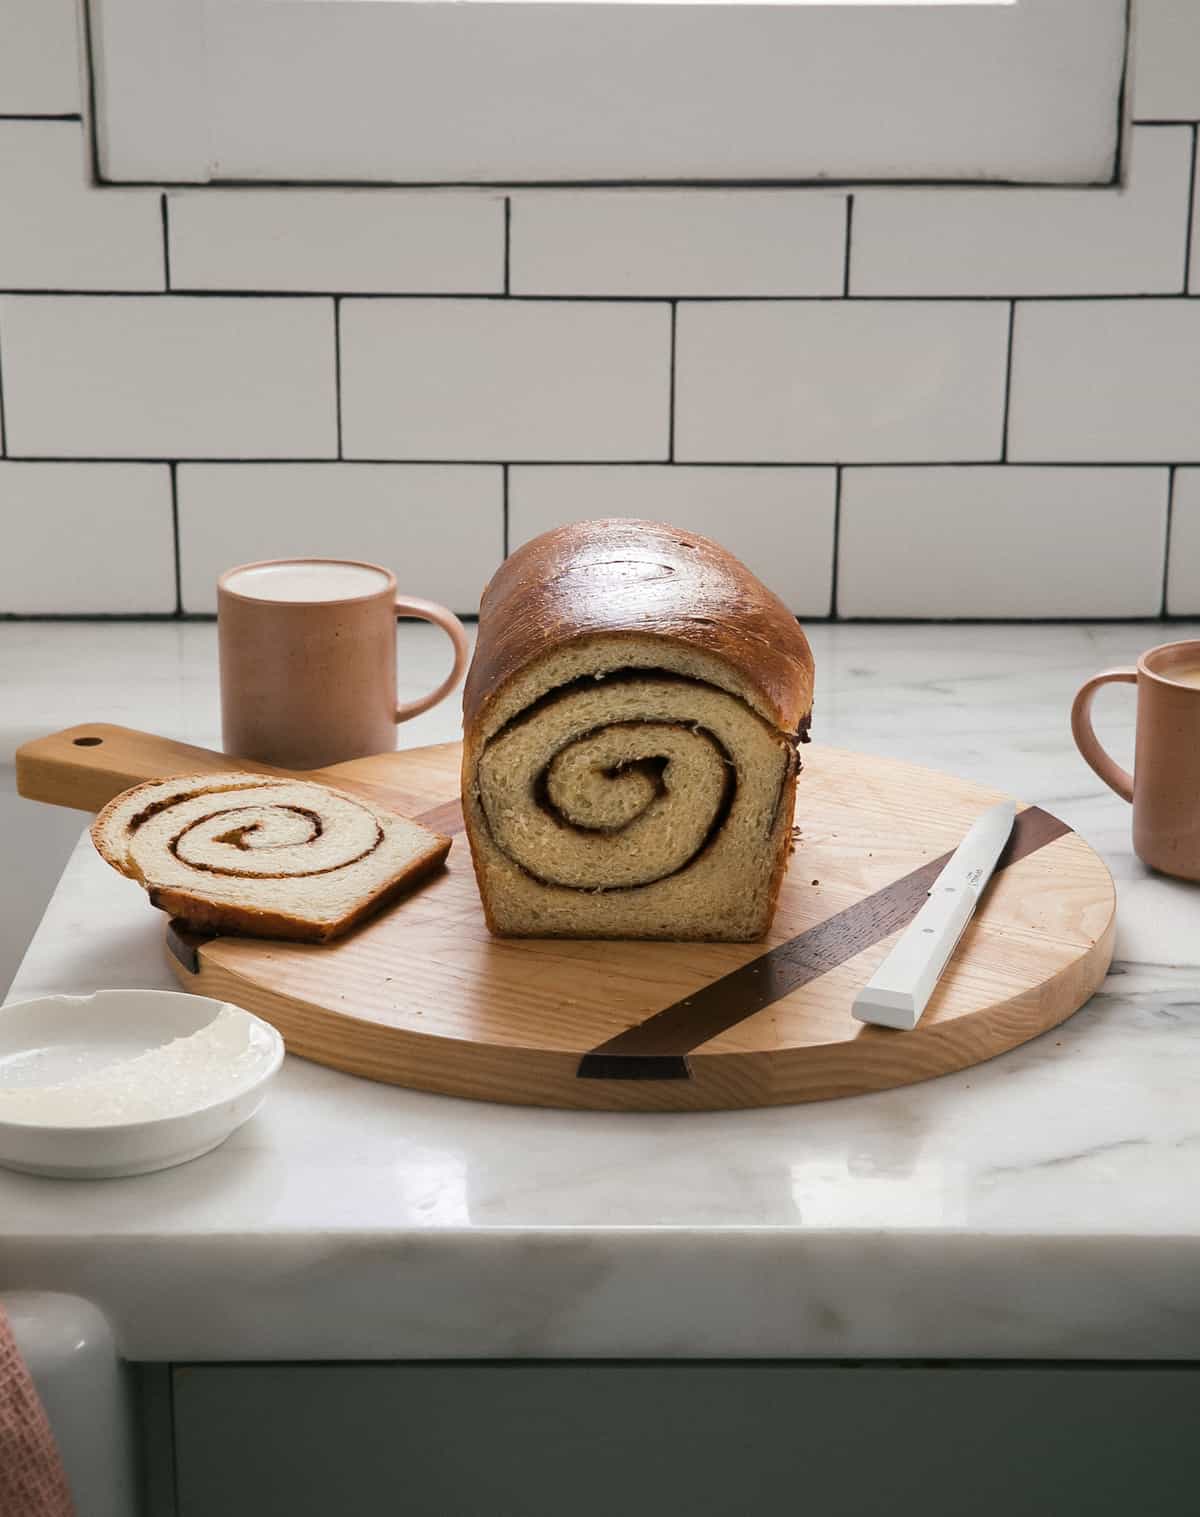 Cinnamon Swirl Bread sliced.